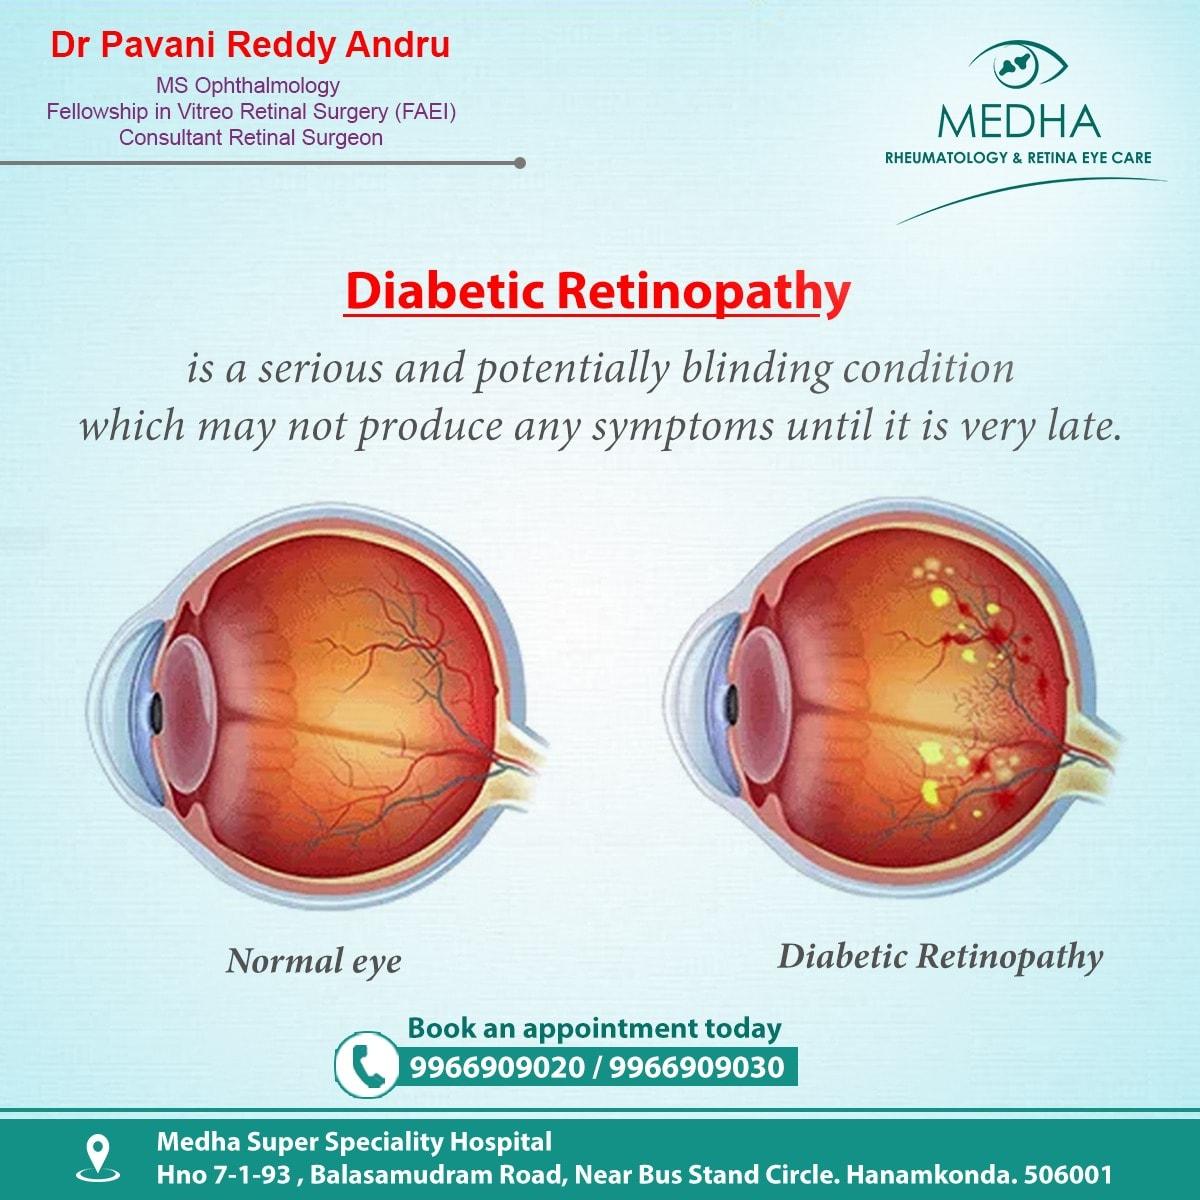 What is Diabetes retinopathy ?